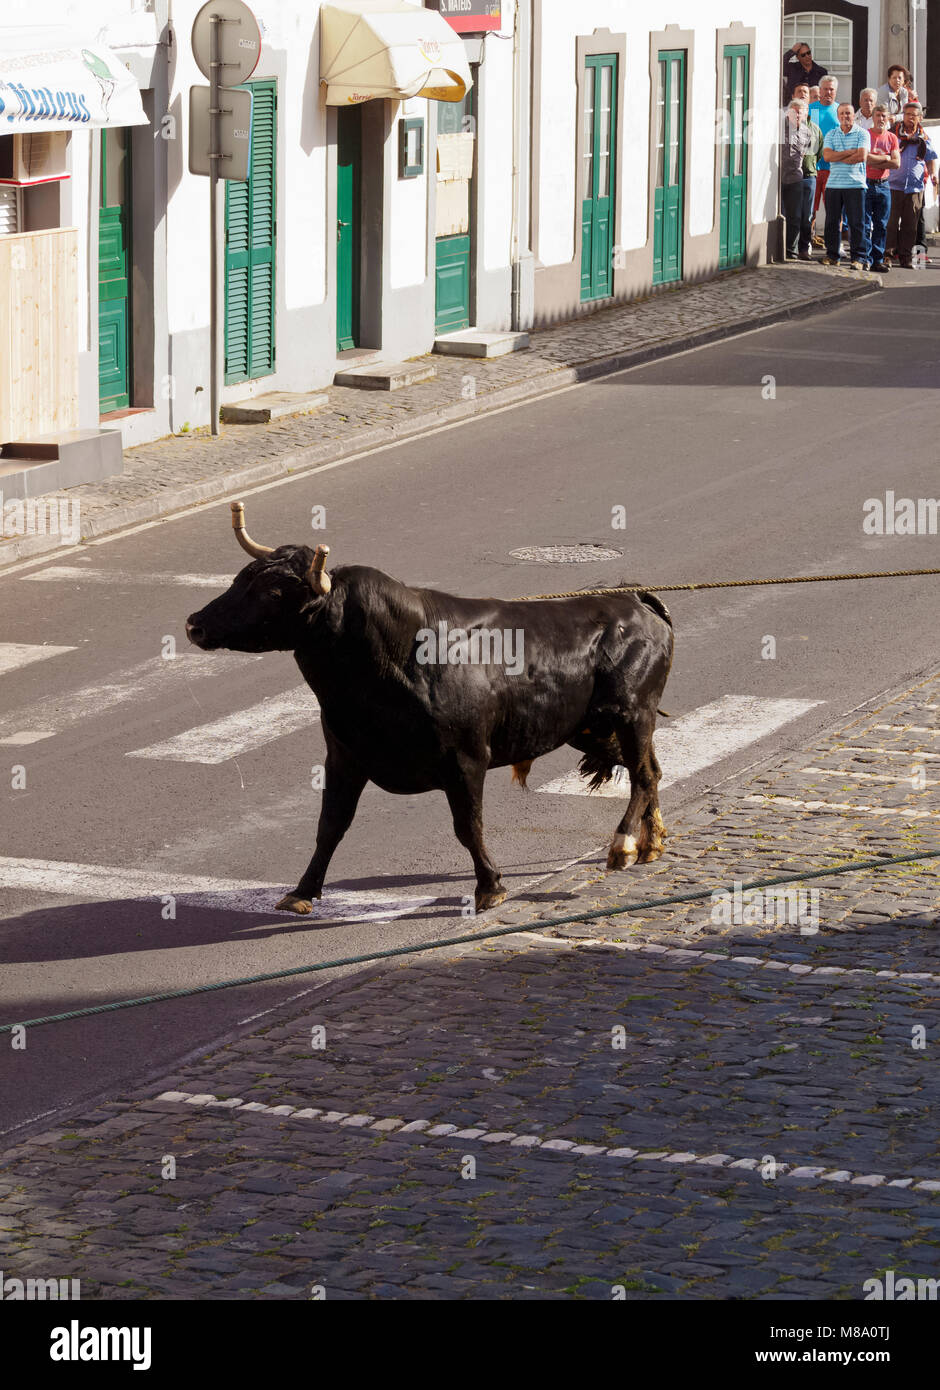 Tourada a corda, bullfighting on a rope, Sao Mateus da Calheta, Terceira Island, Azores, Portugal Stock Photo